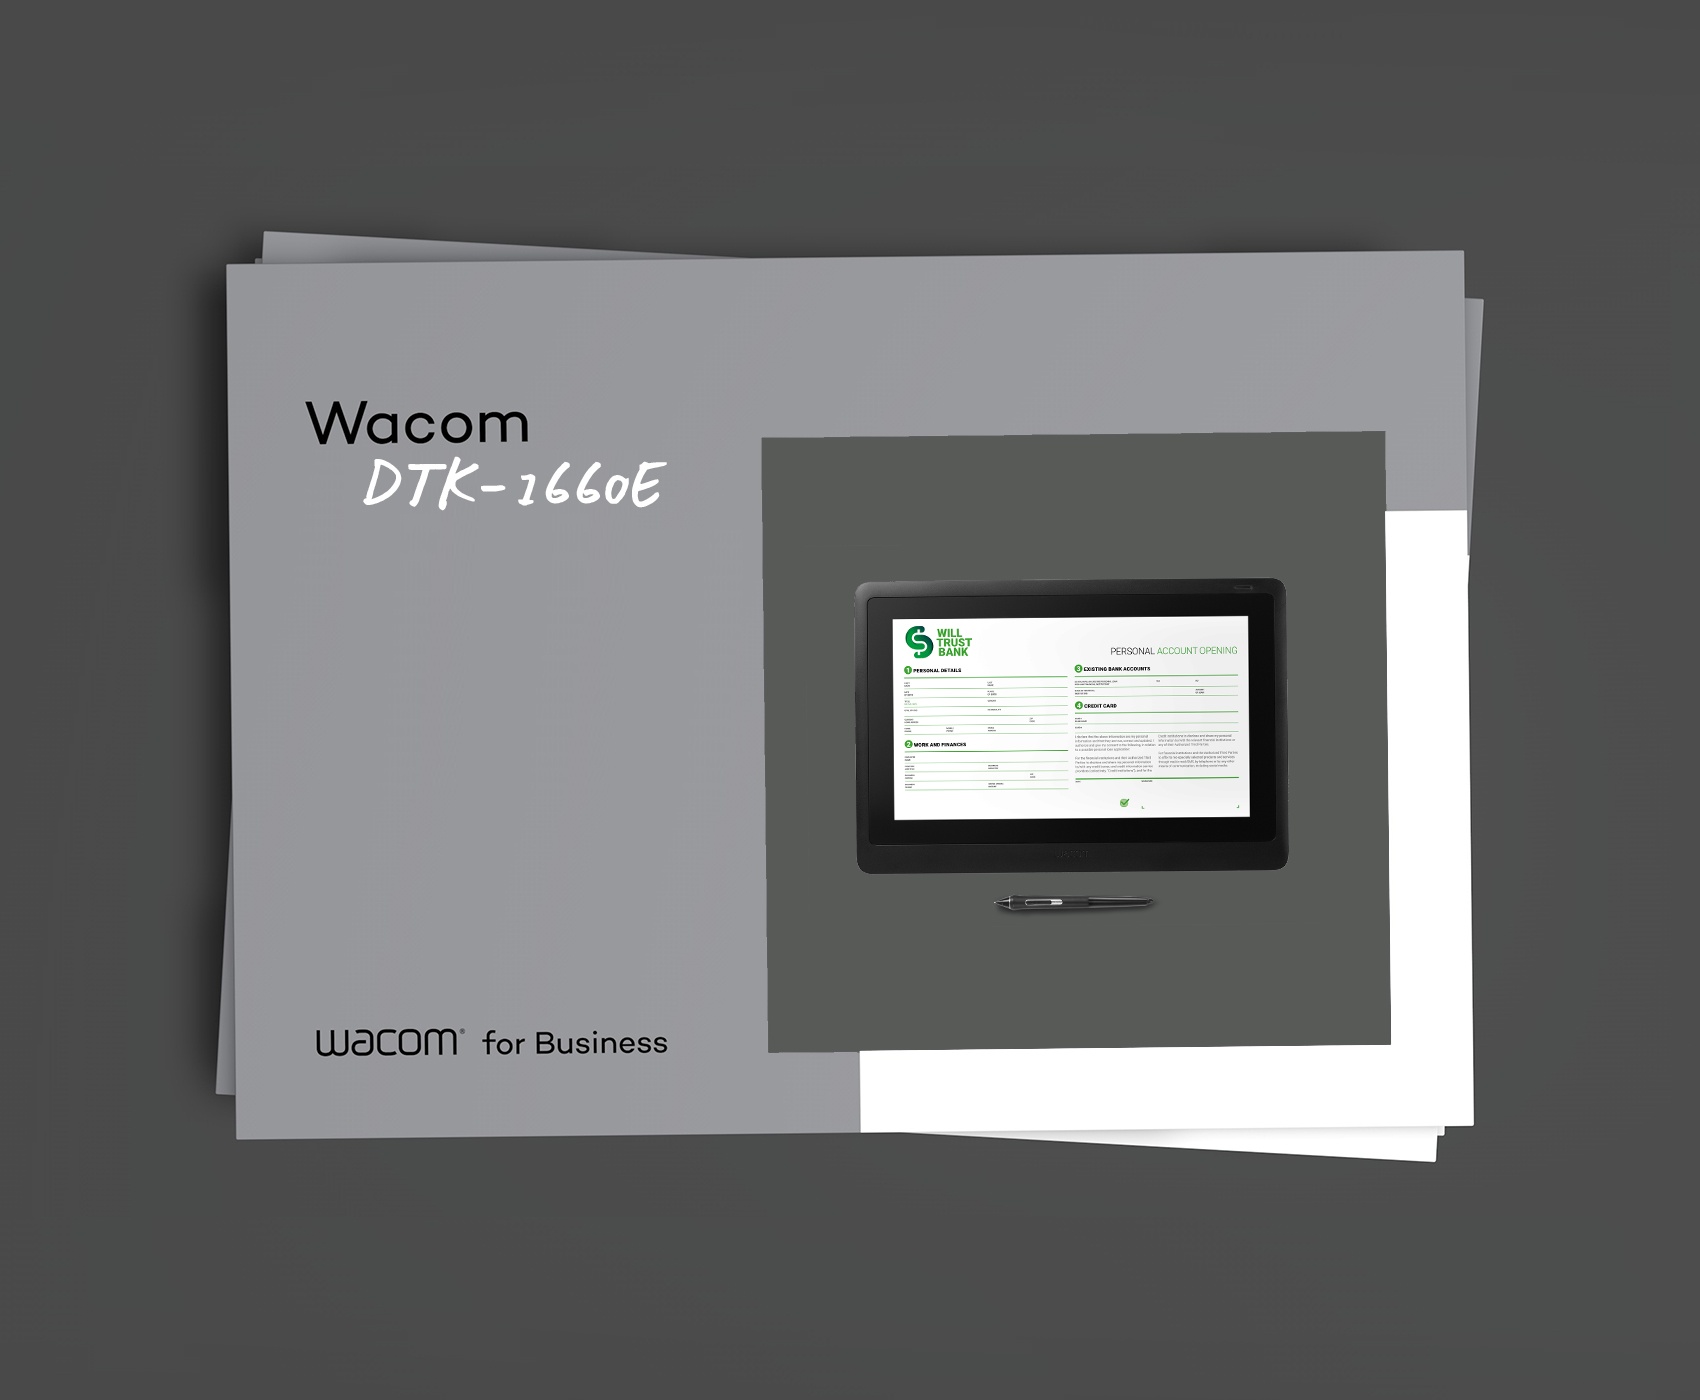 Wacom DTK-1660E Pen Display Overview | Wacom for Business